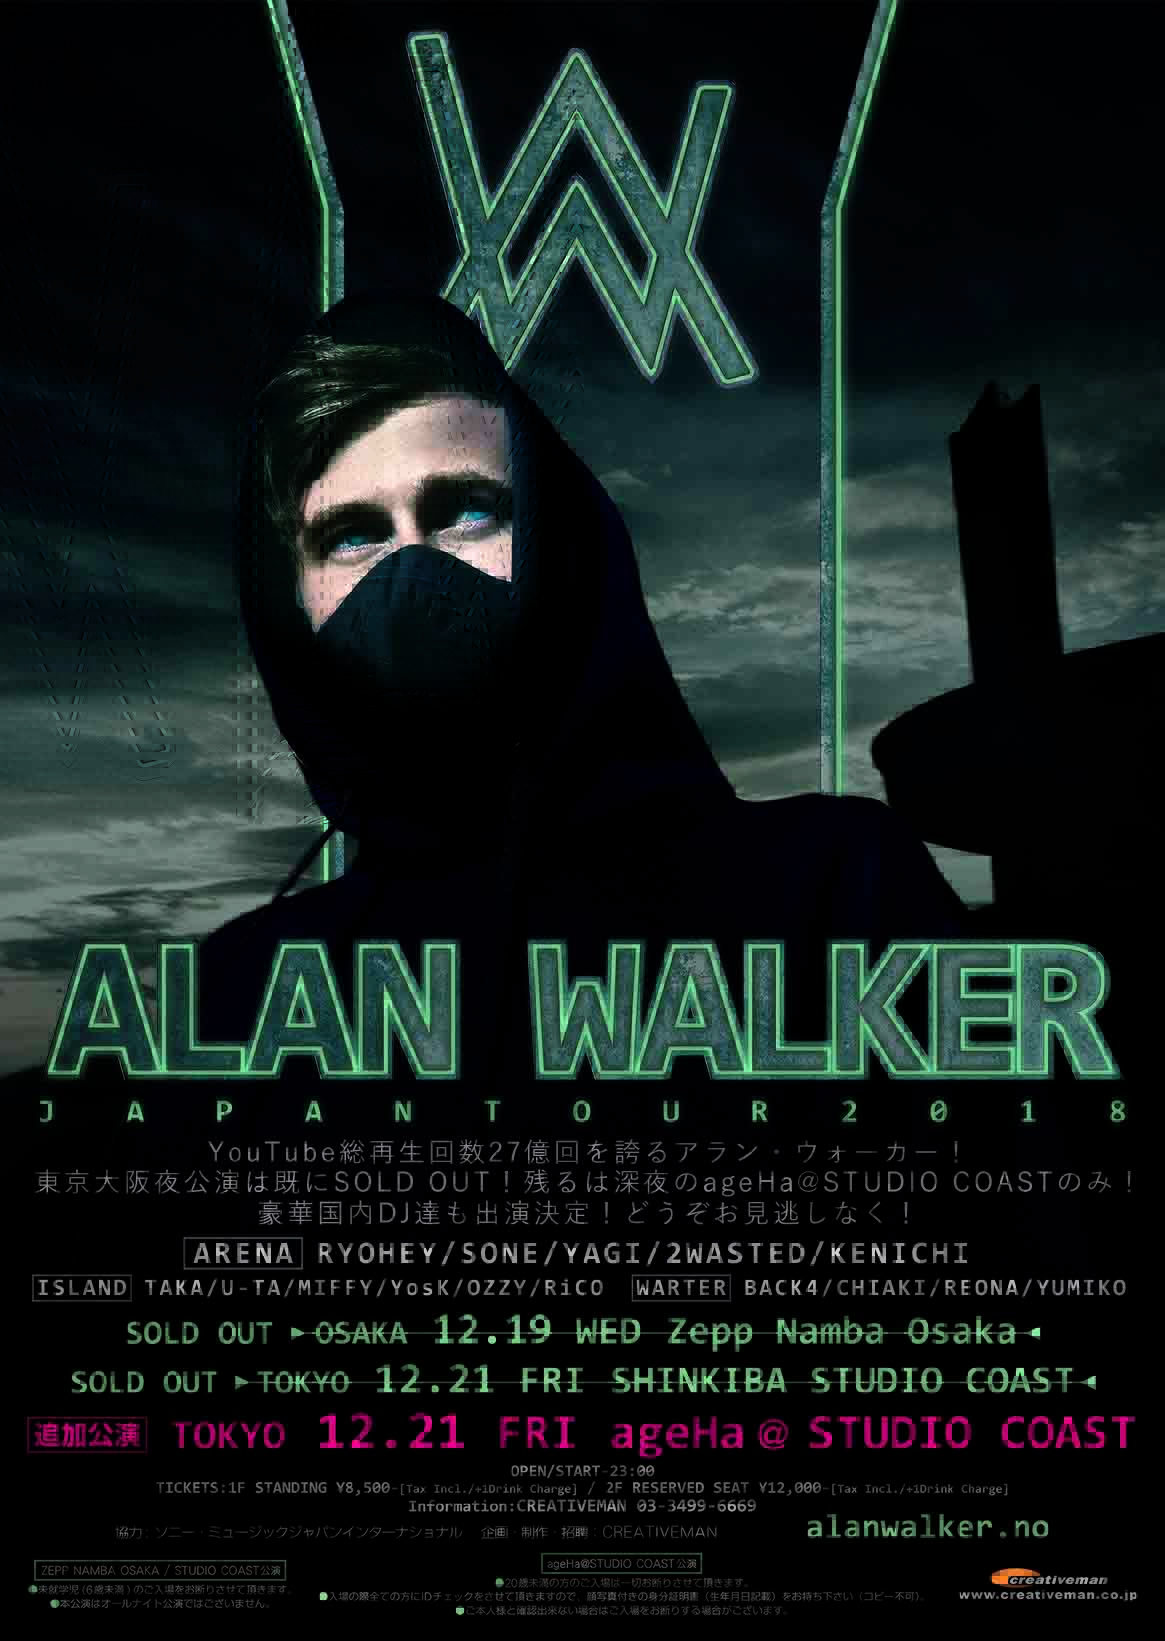 Alan Walker 来日 12月21日 金 東京追加公演決定 Tokyoedm